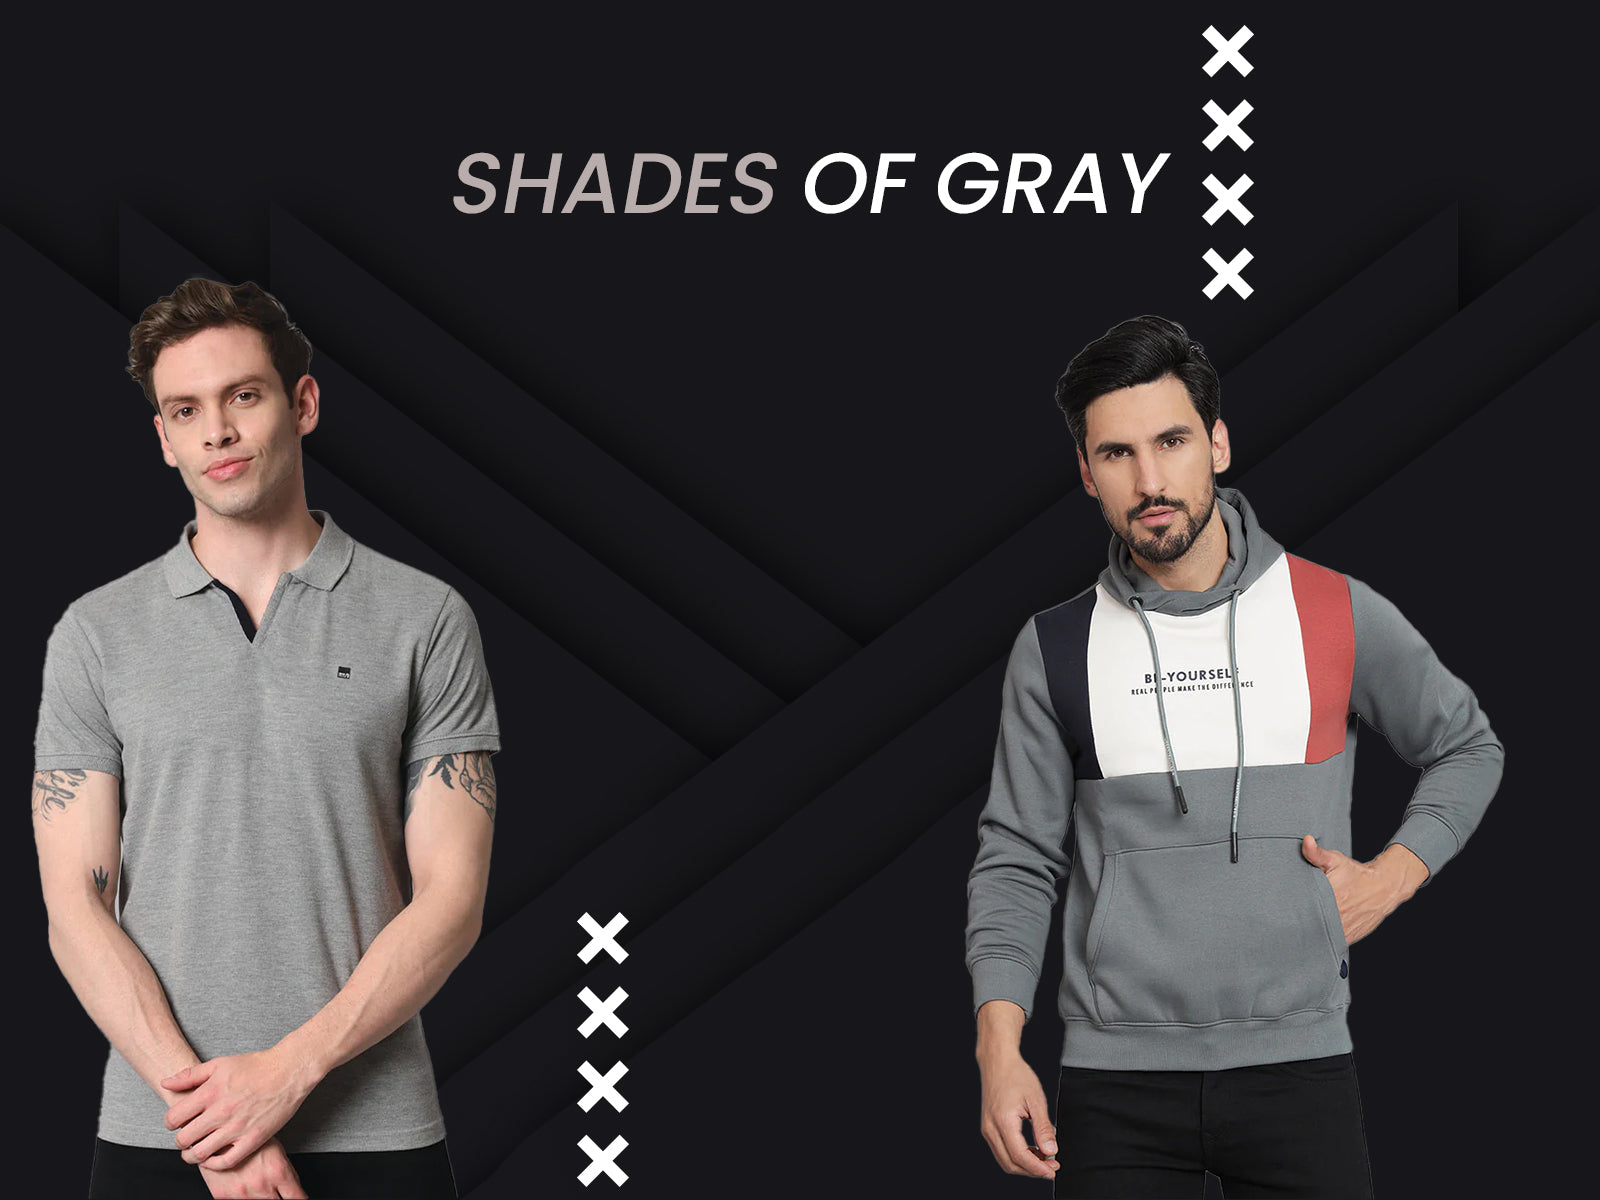 Shades Of Gray-Stylish Sweatshirts And T-Shirts For Men